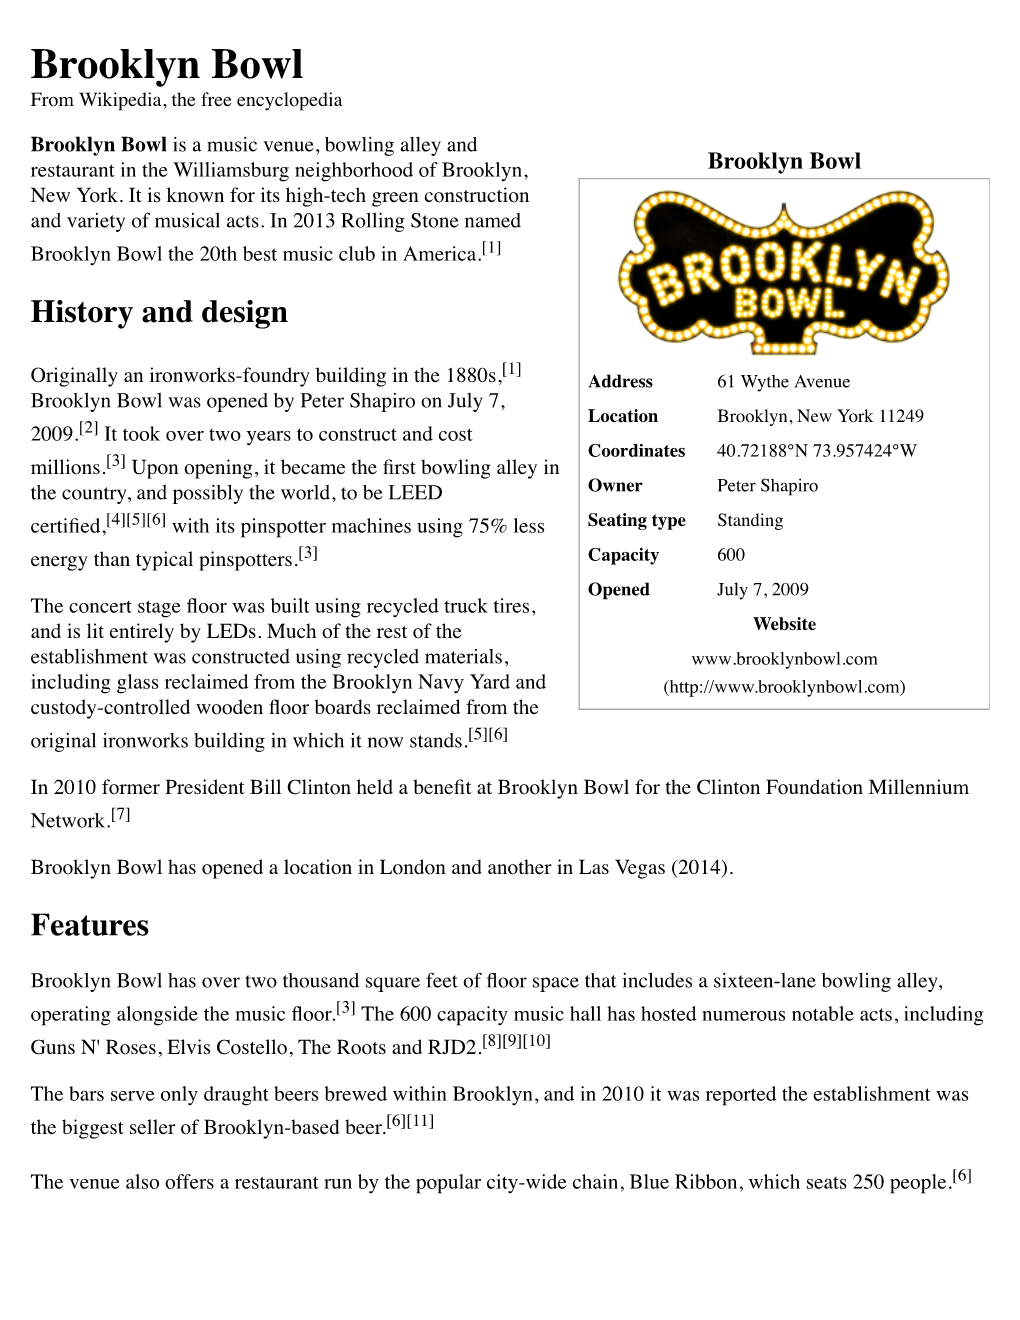 Brooklyn Bowl from Wikipedia, the Free Encyclopedia